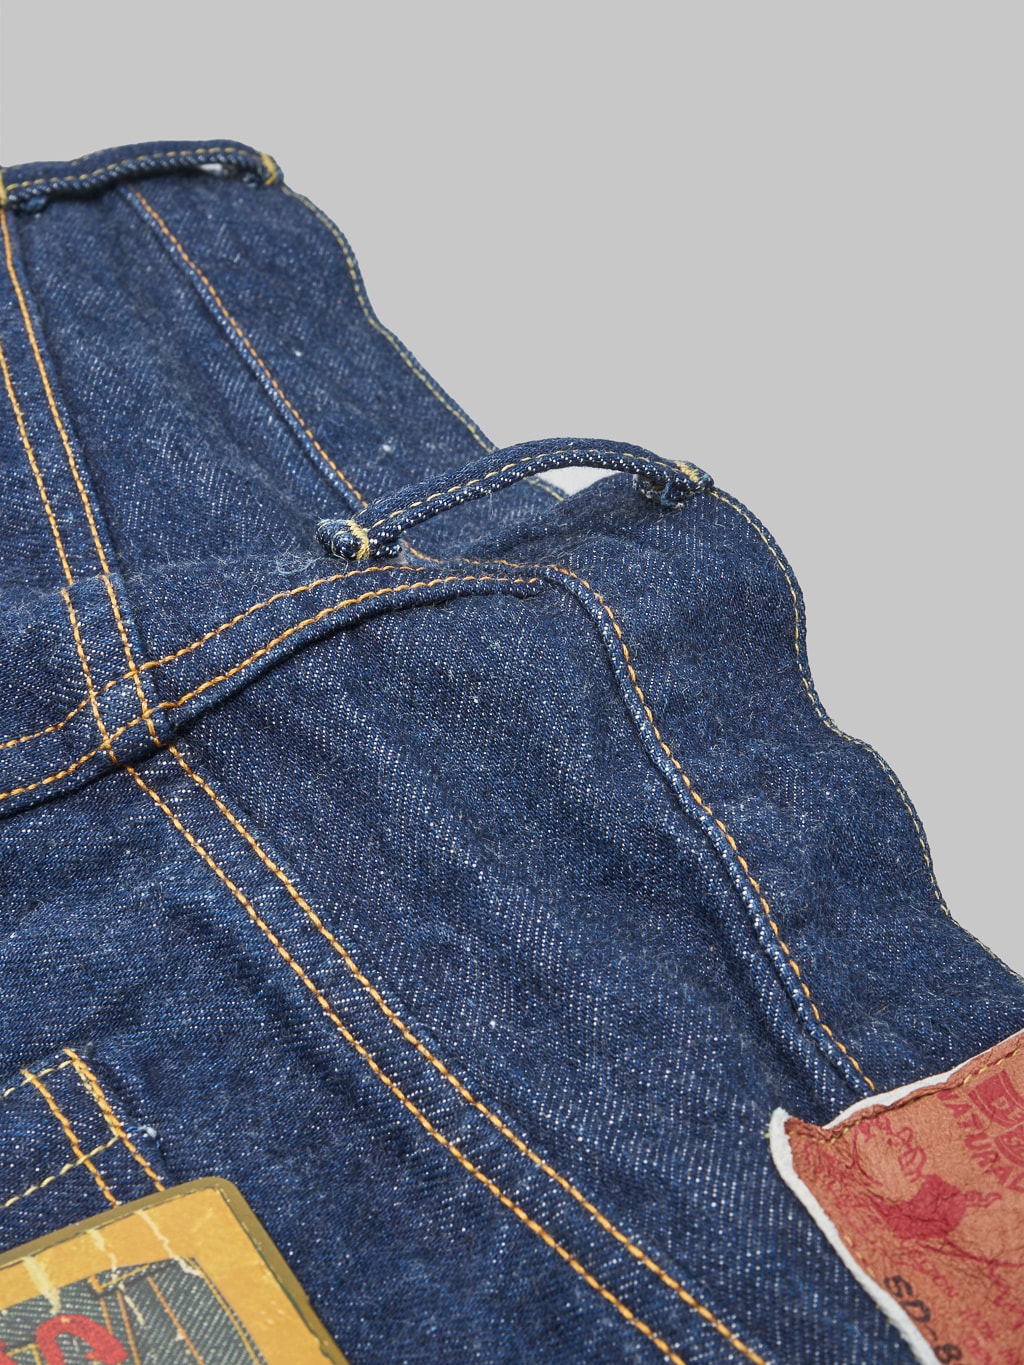 Studio D'Artisan natural indigo jeans back belt loop